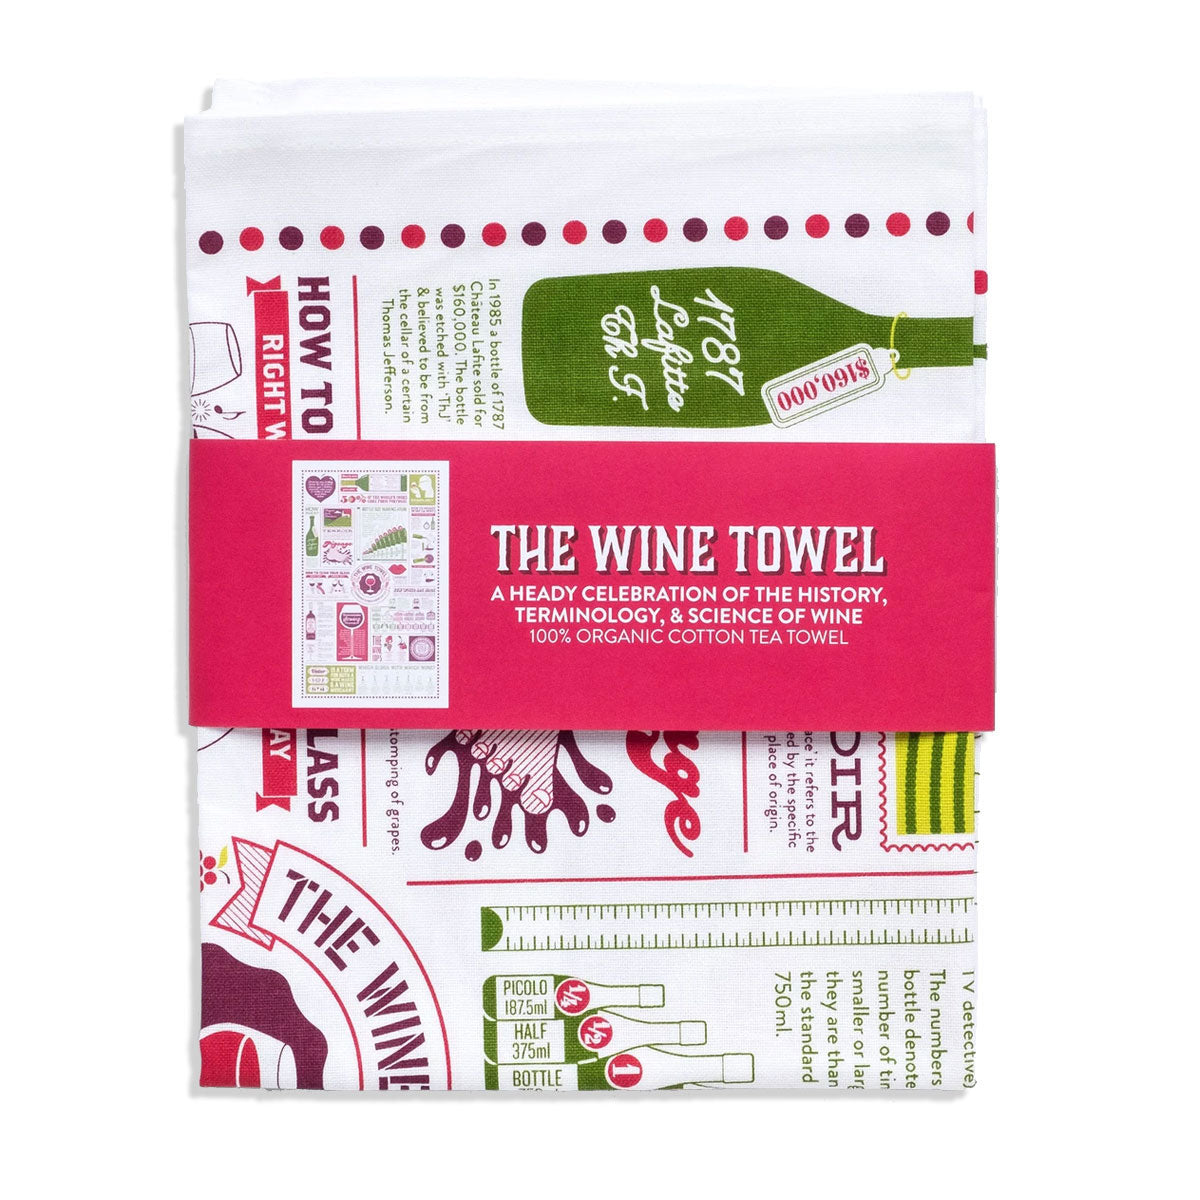 The Wine Guide Tea Towel